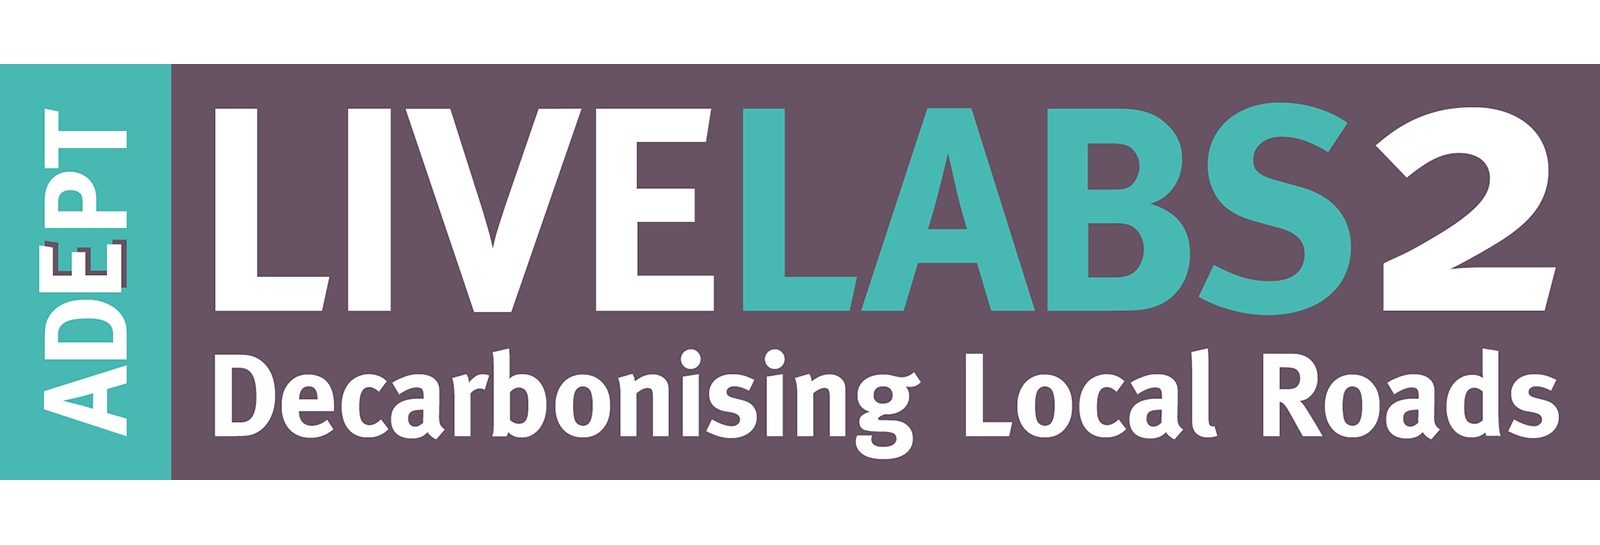 Live Labs 2 logo banner image